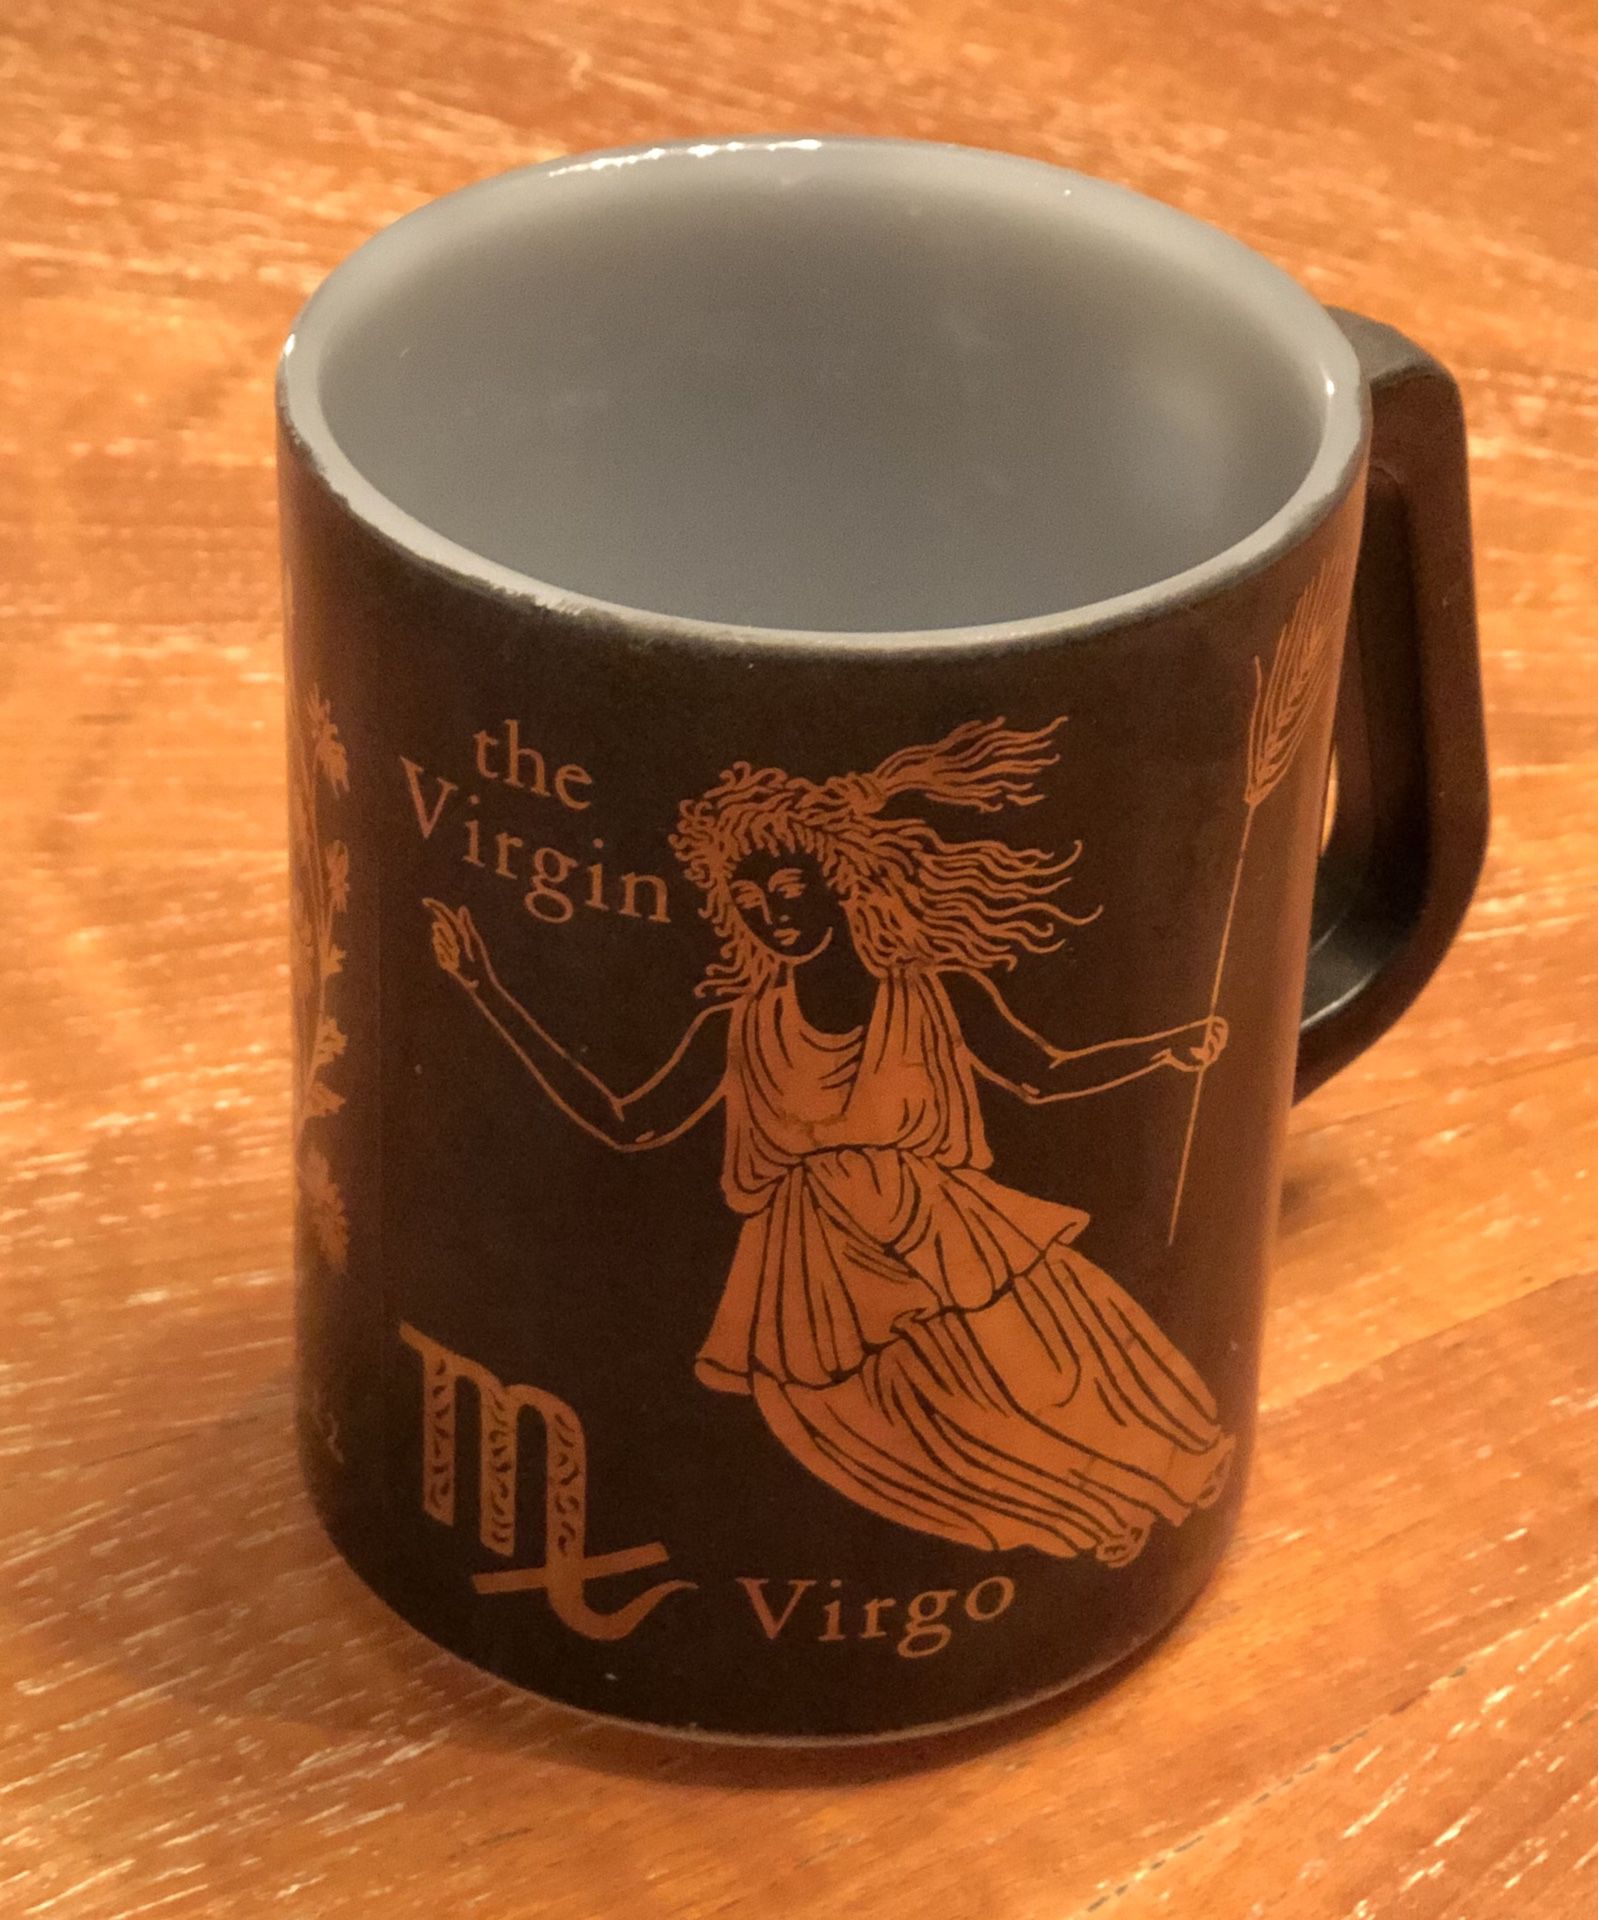 Virgo vintage mug made by Heat Proof.